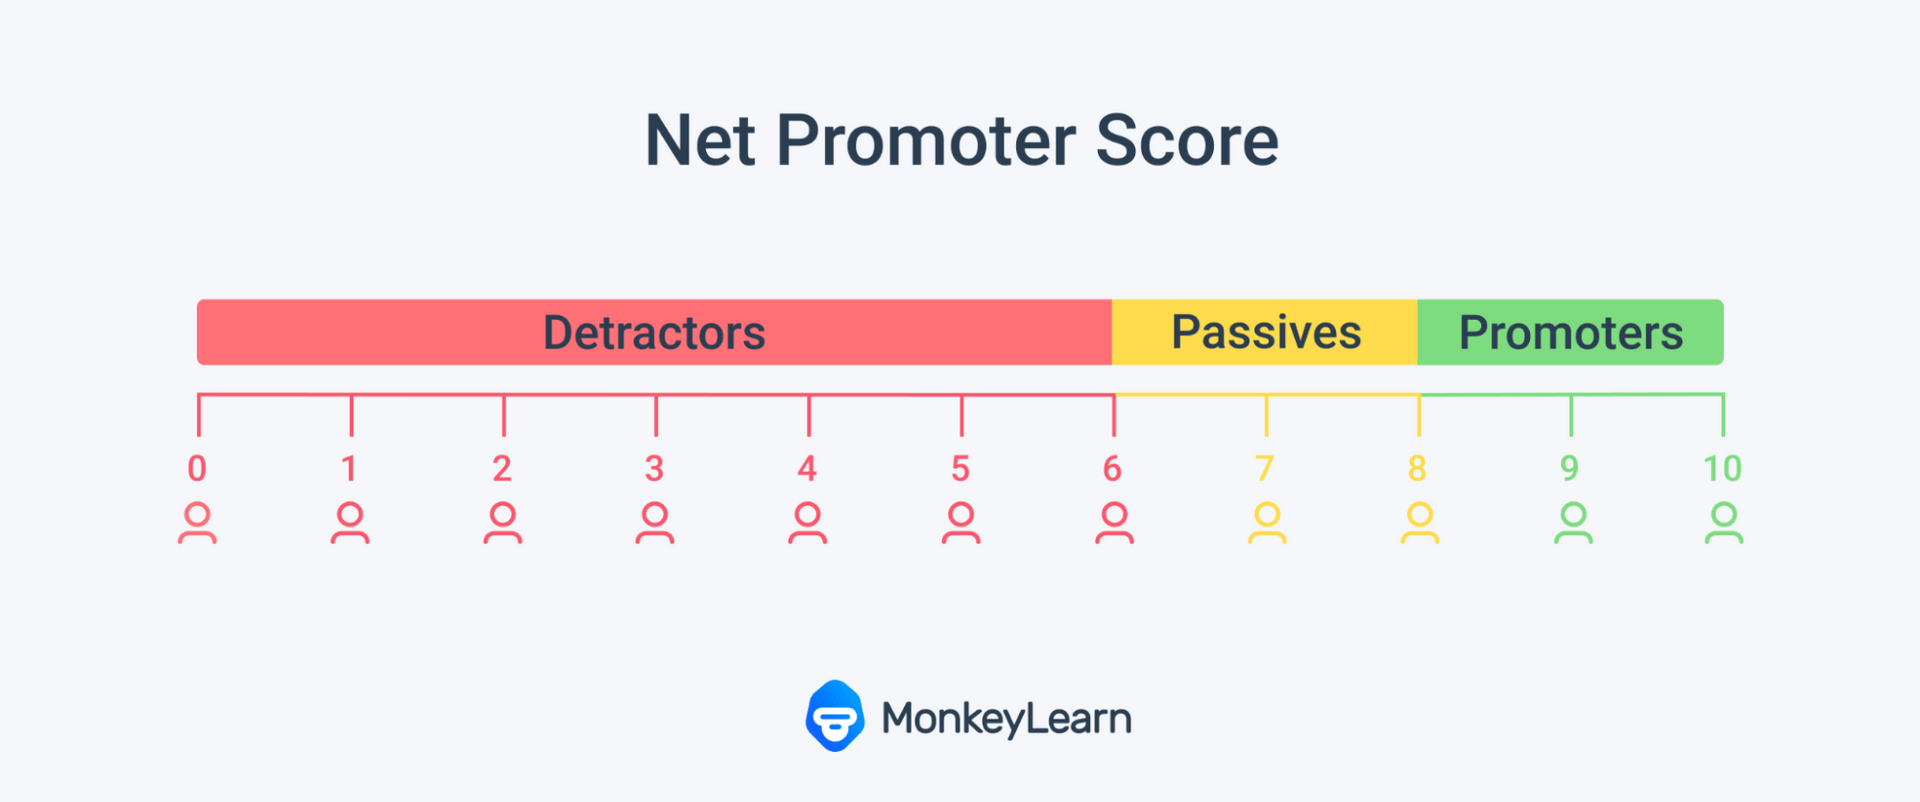 Net Promoter Score Chart showing 9-10: Promoters, 7-8: Passives and 0-6: Detractors